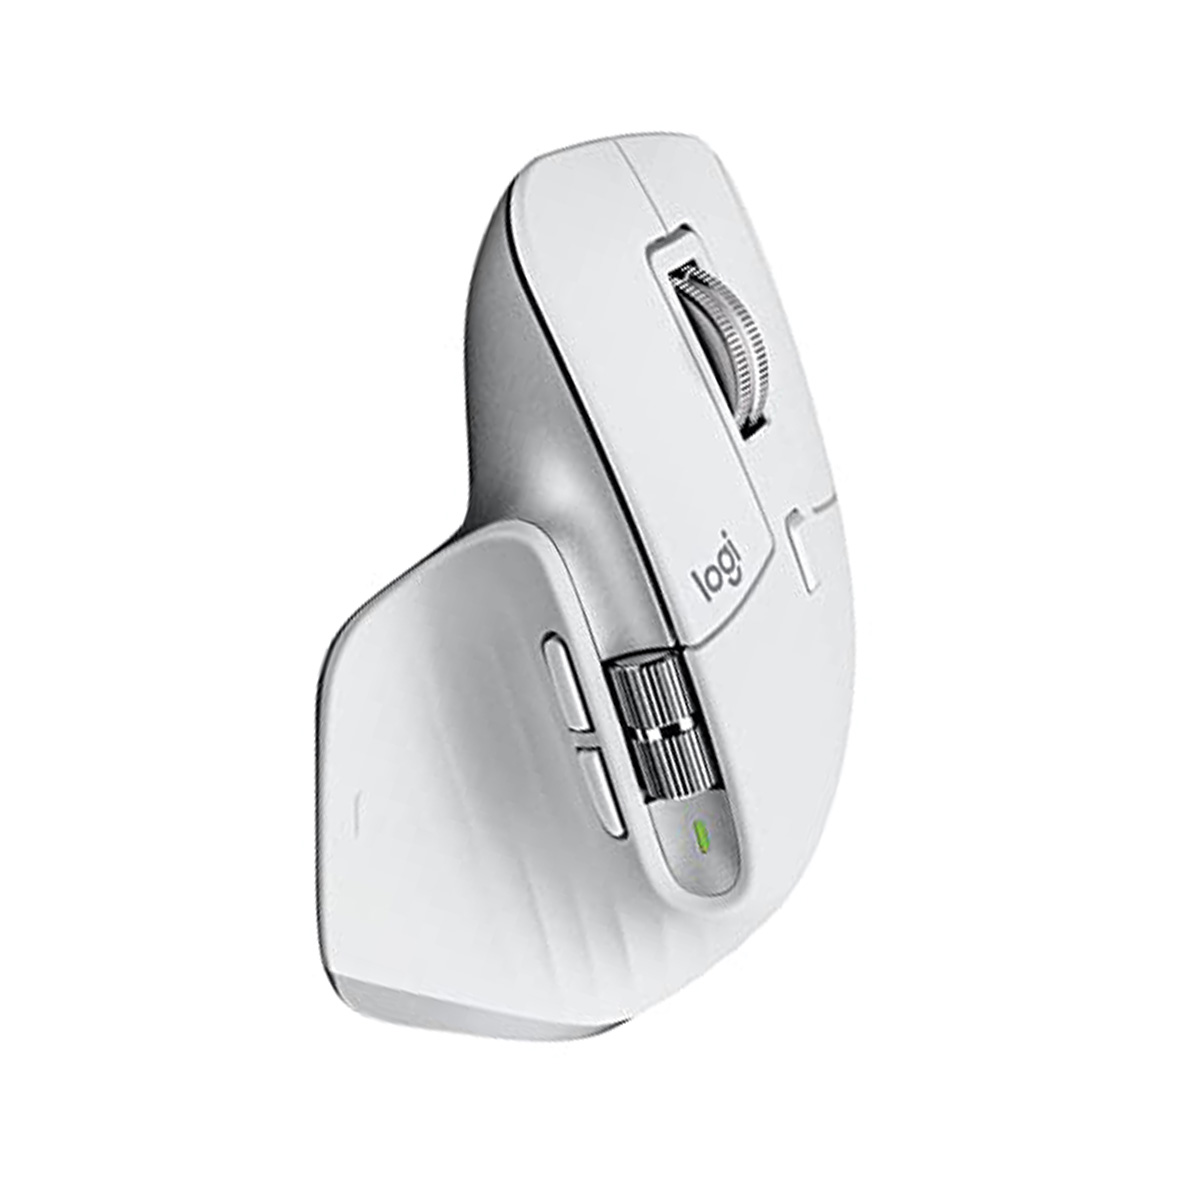 Logitech MX Master Mouse Technologies GrandHub – Ltd 3s